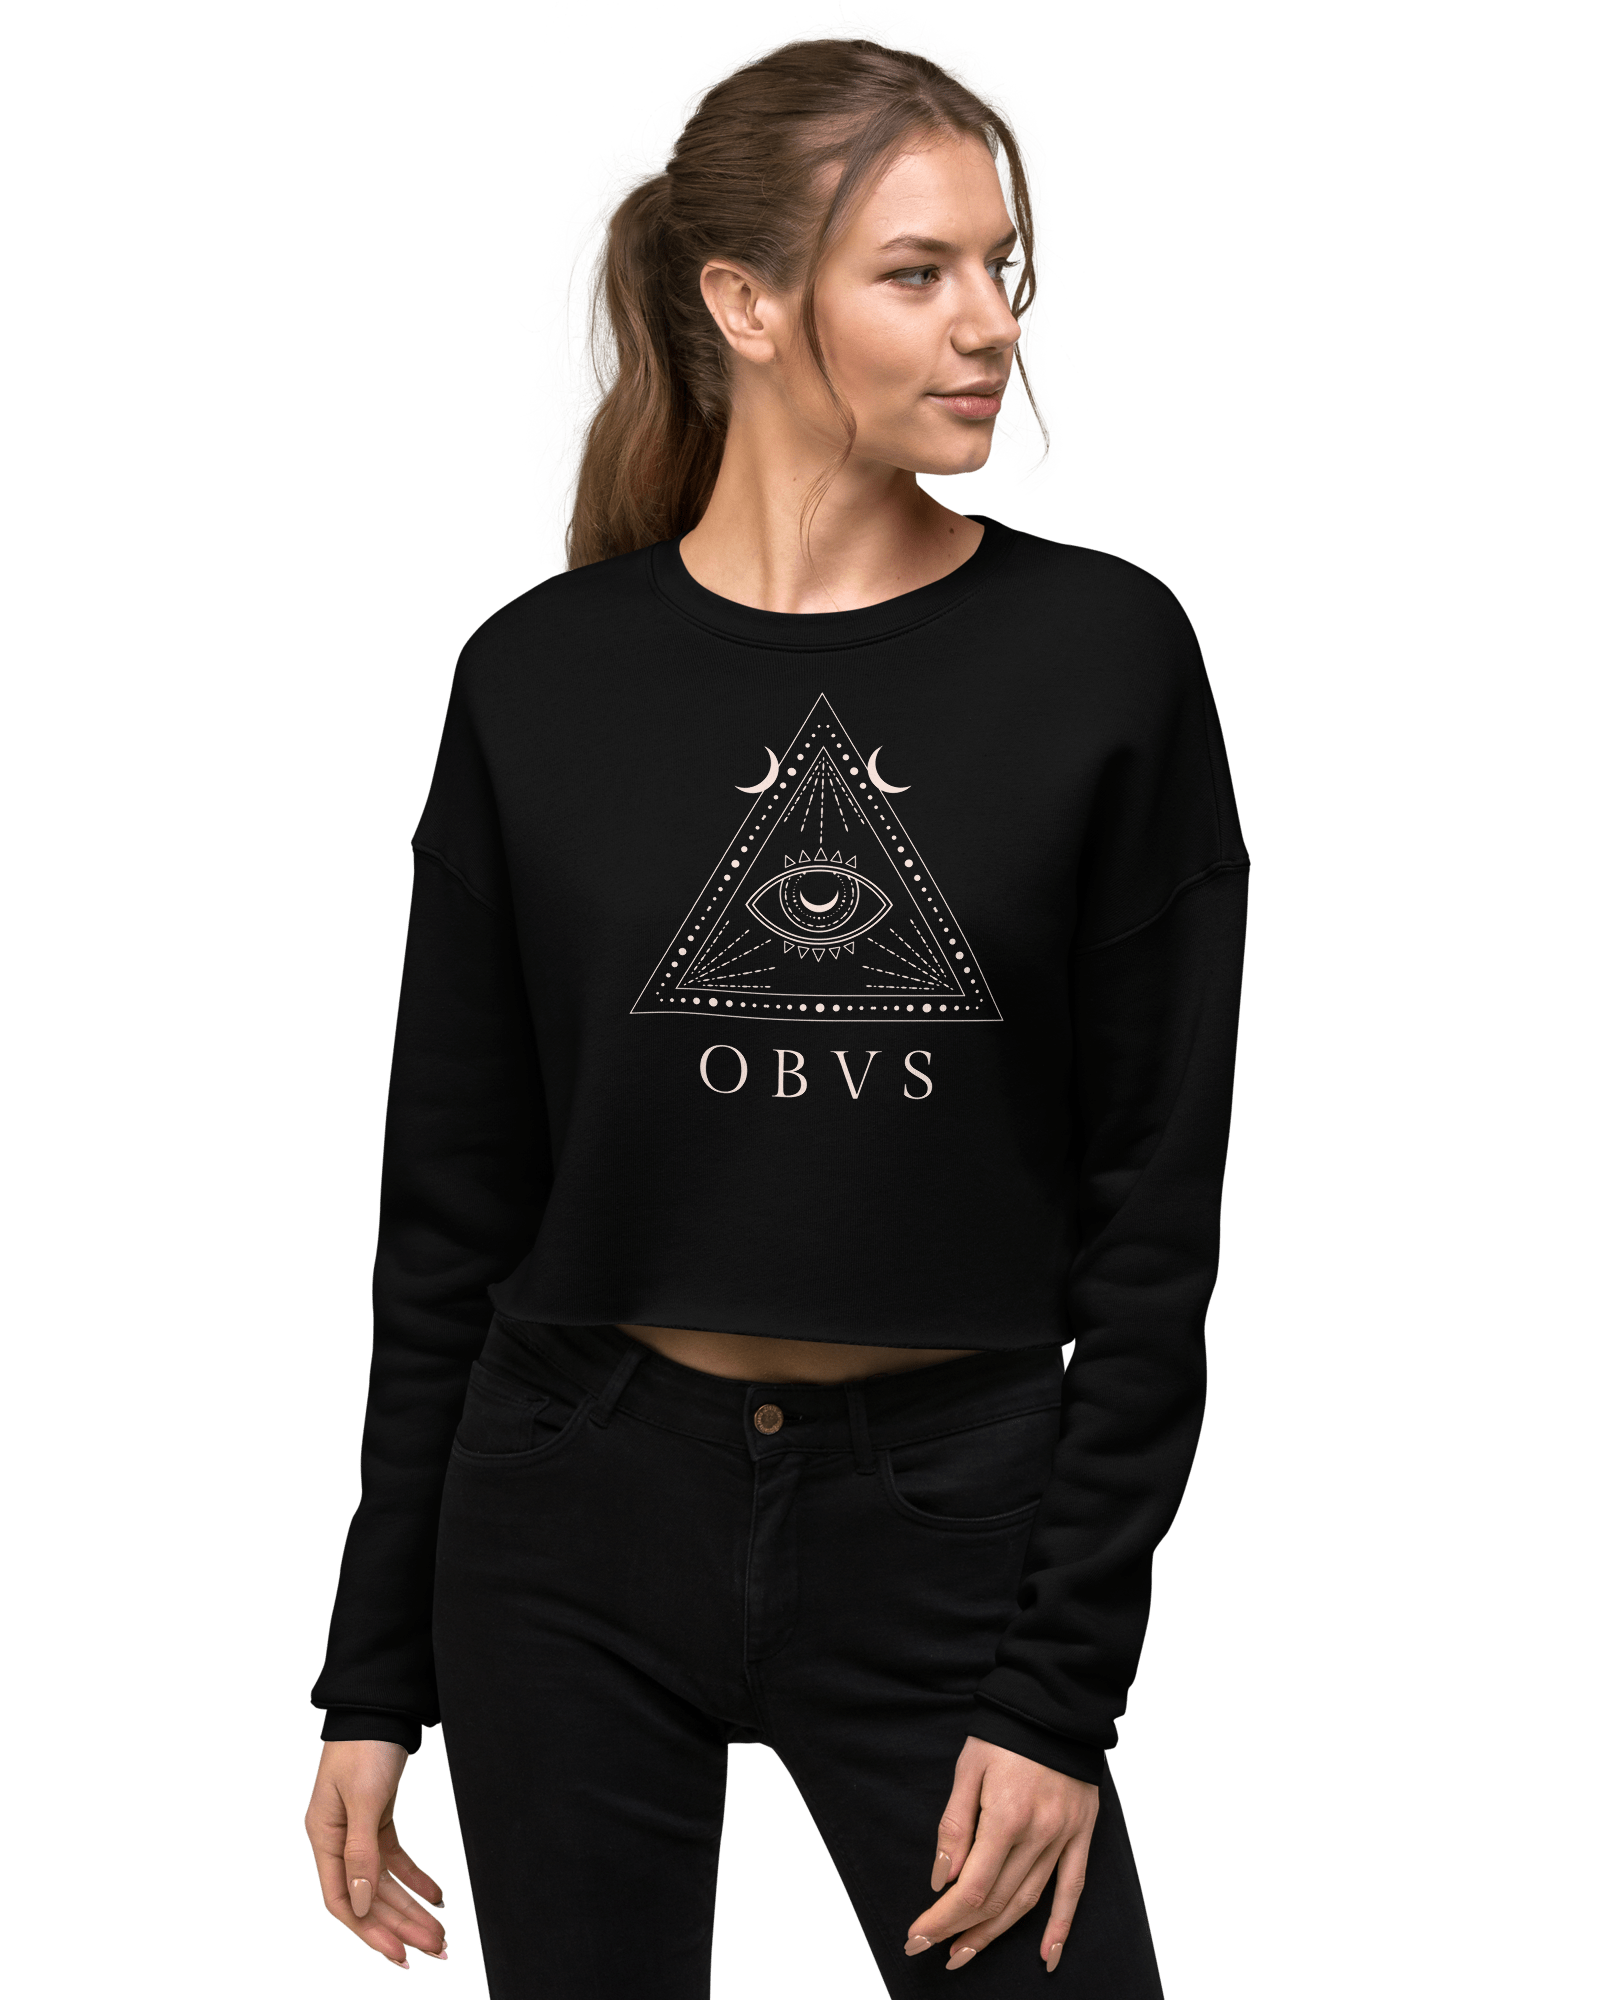 Obvs Crop Sweatshirt Obviously Black / S Jolly & Goode